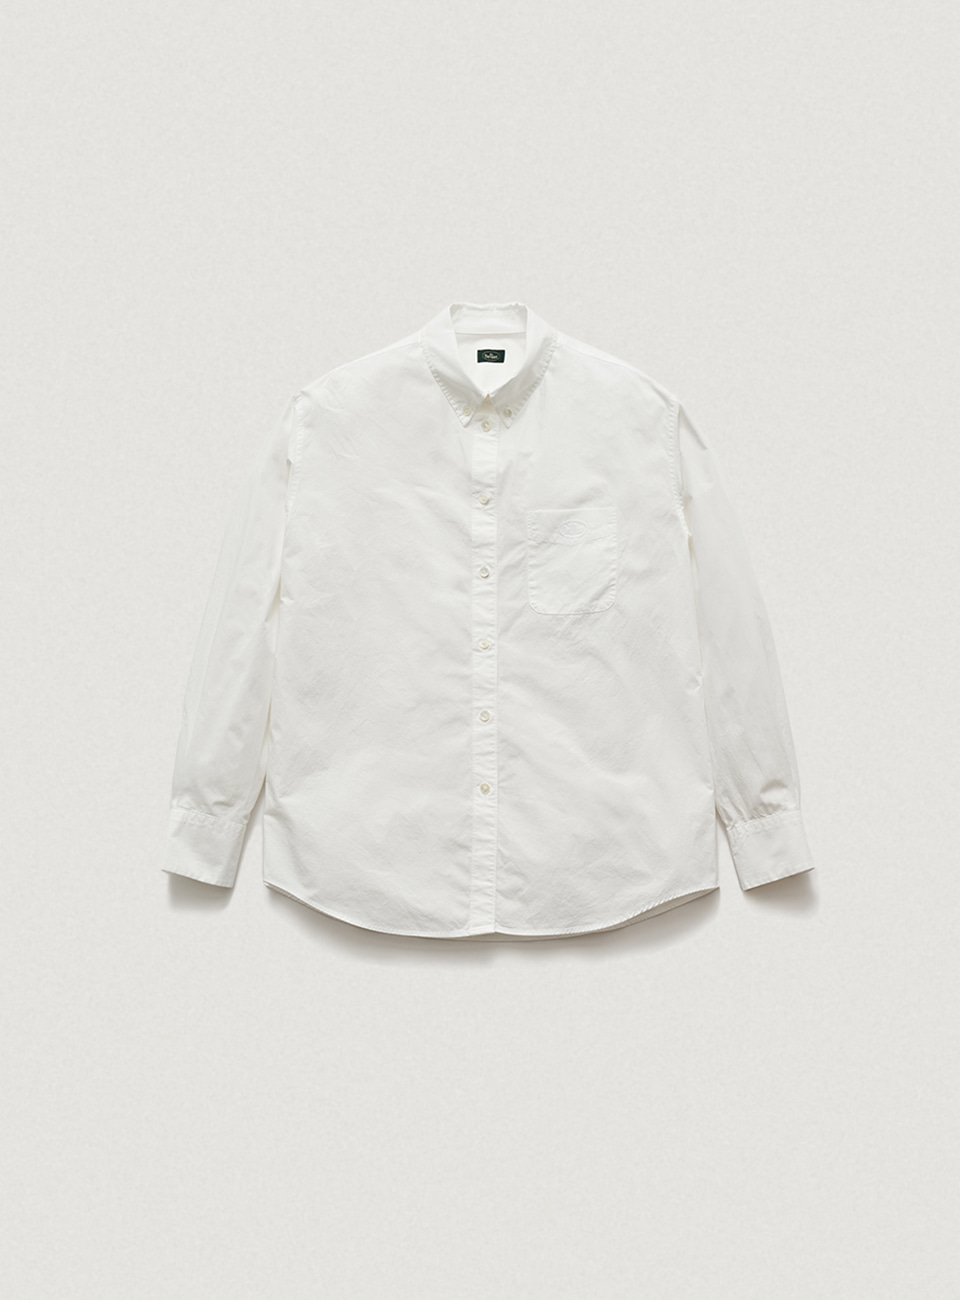 White Bukly Shirt [6월 초 순차 배송]